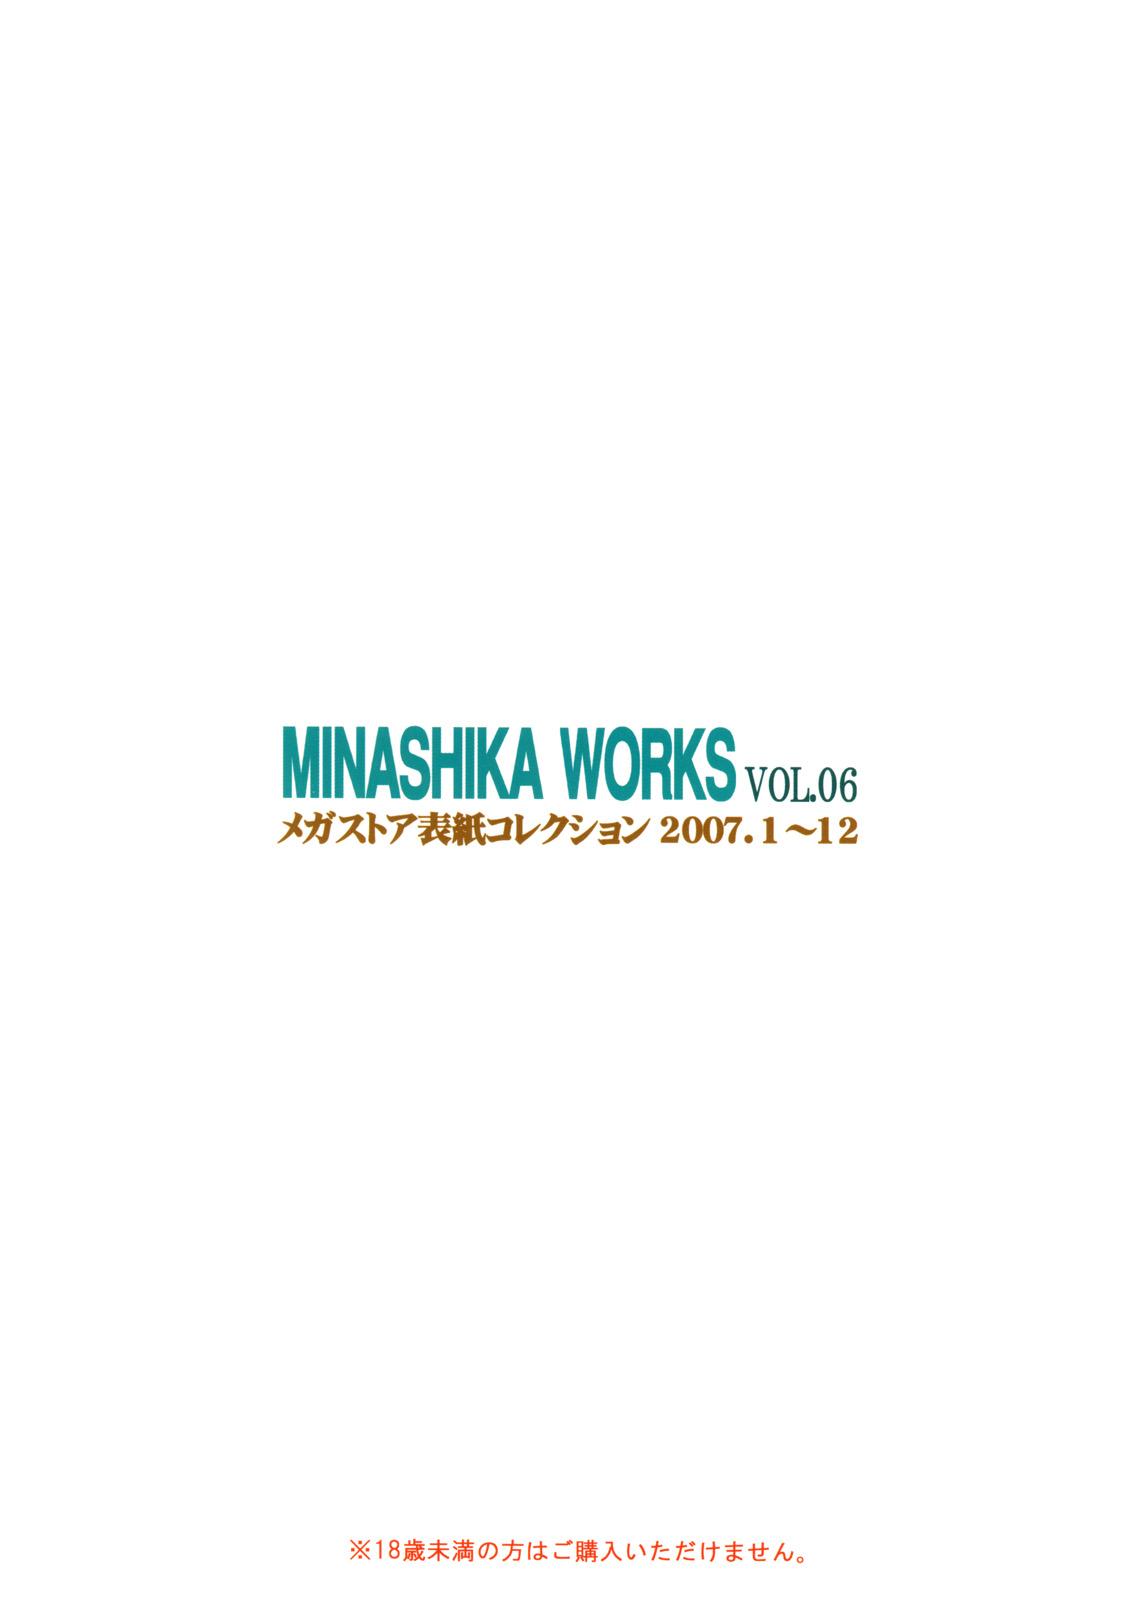 MINASHIKA WORKS Vol 06 Megastore Cover Collection 2007.1~12 21